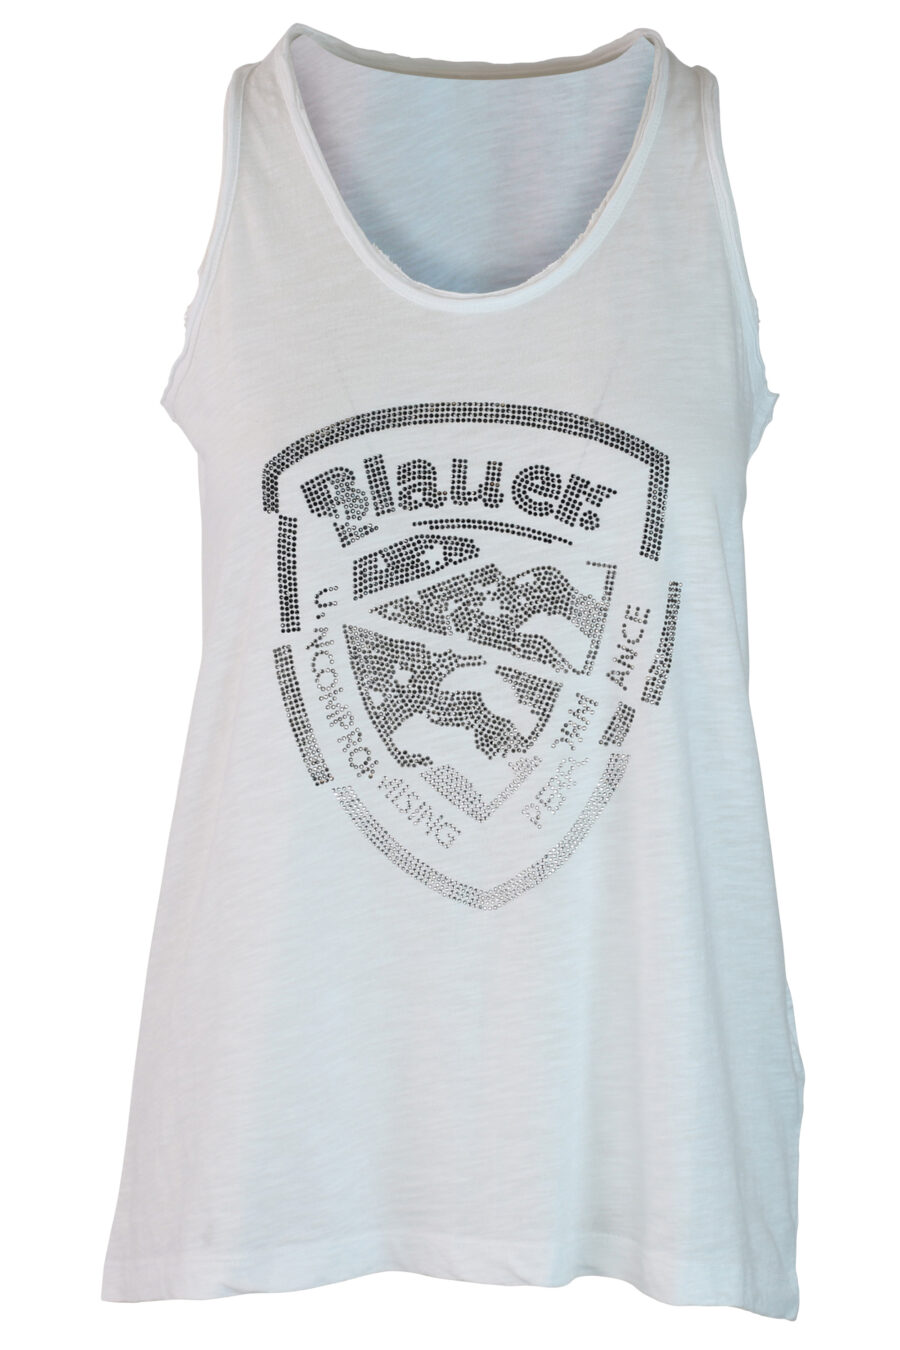 Weißes ärmelloses T-Shirt mit silbernem Maxilogo - IMG 0372